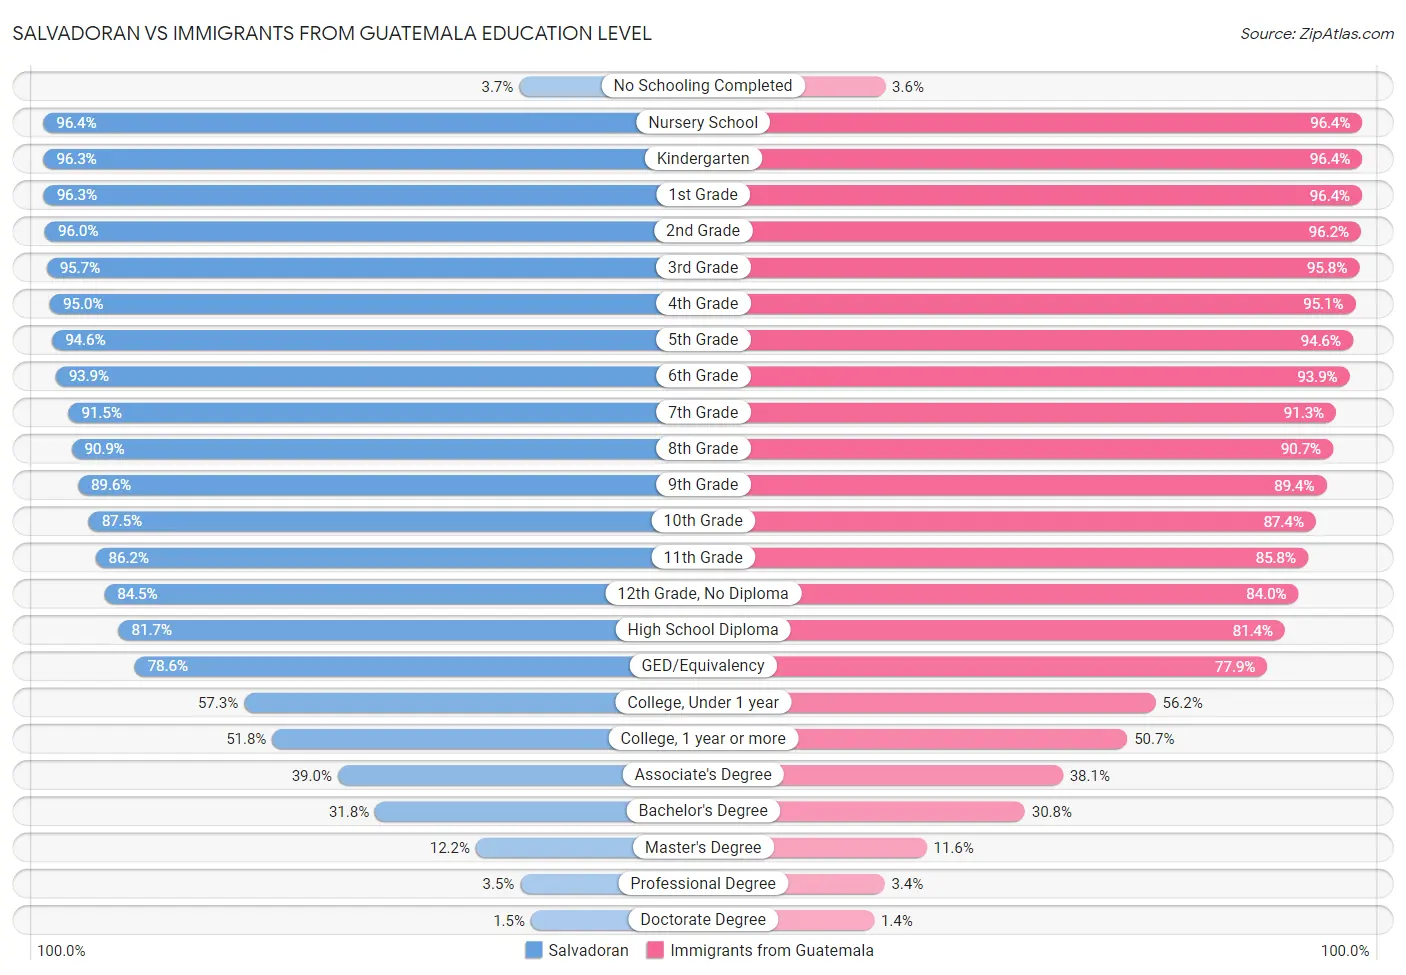 Salvadoran vs Immigrants from Guatemala Education Level